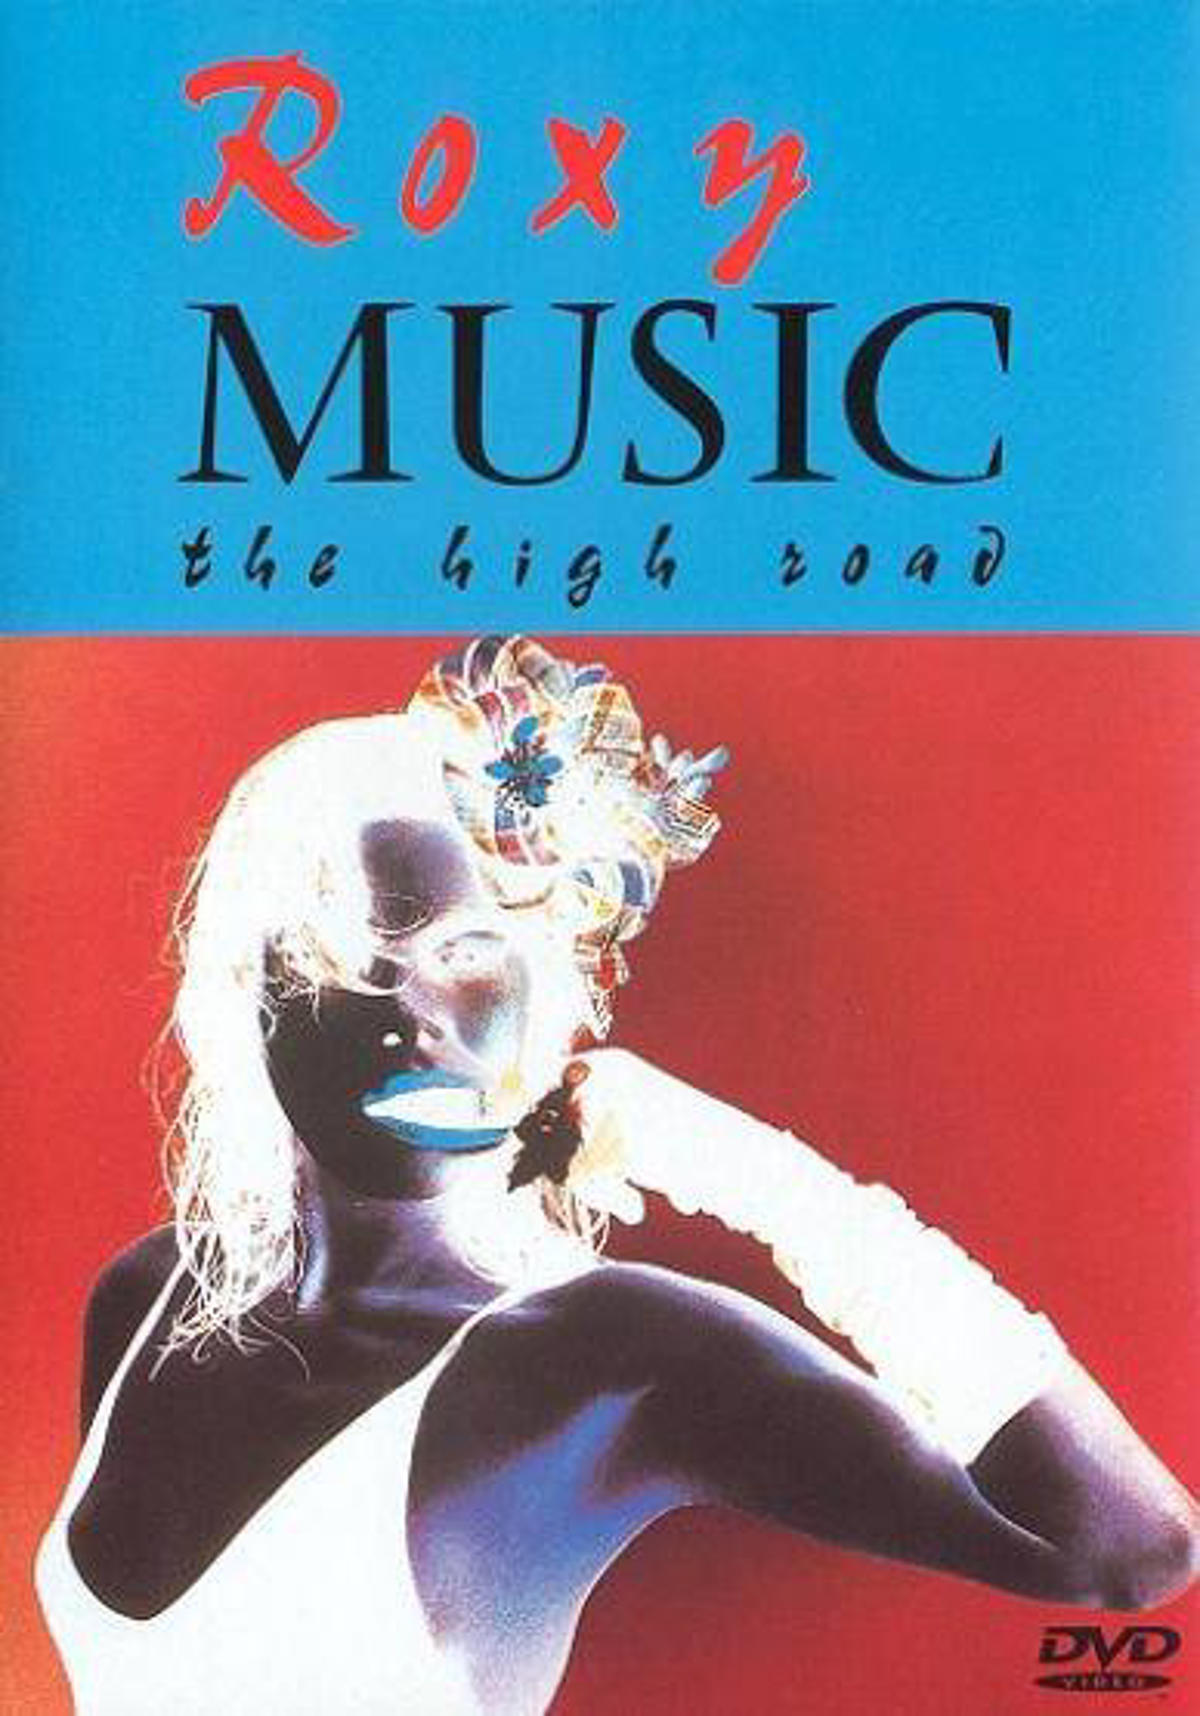 Roxy Music High Road (DVD) wehkamp